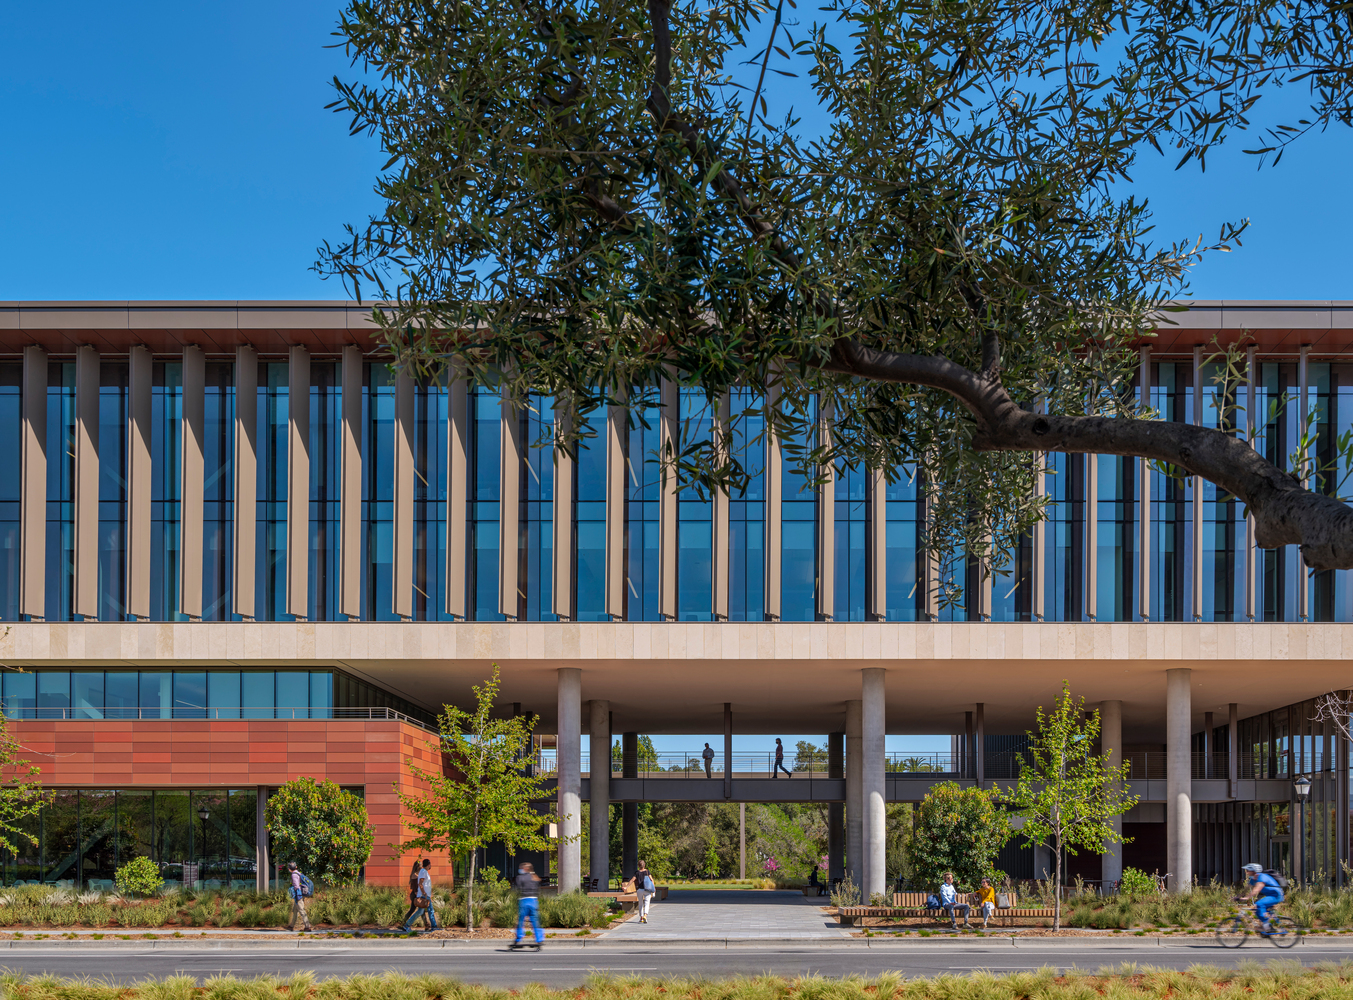 Stanford University School of Medicine Center for Academic Medicine design by HOK